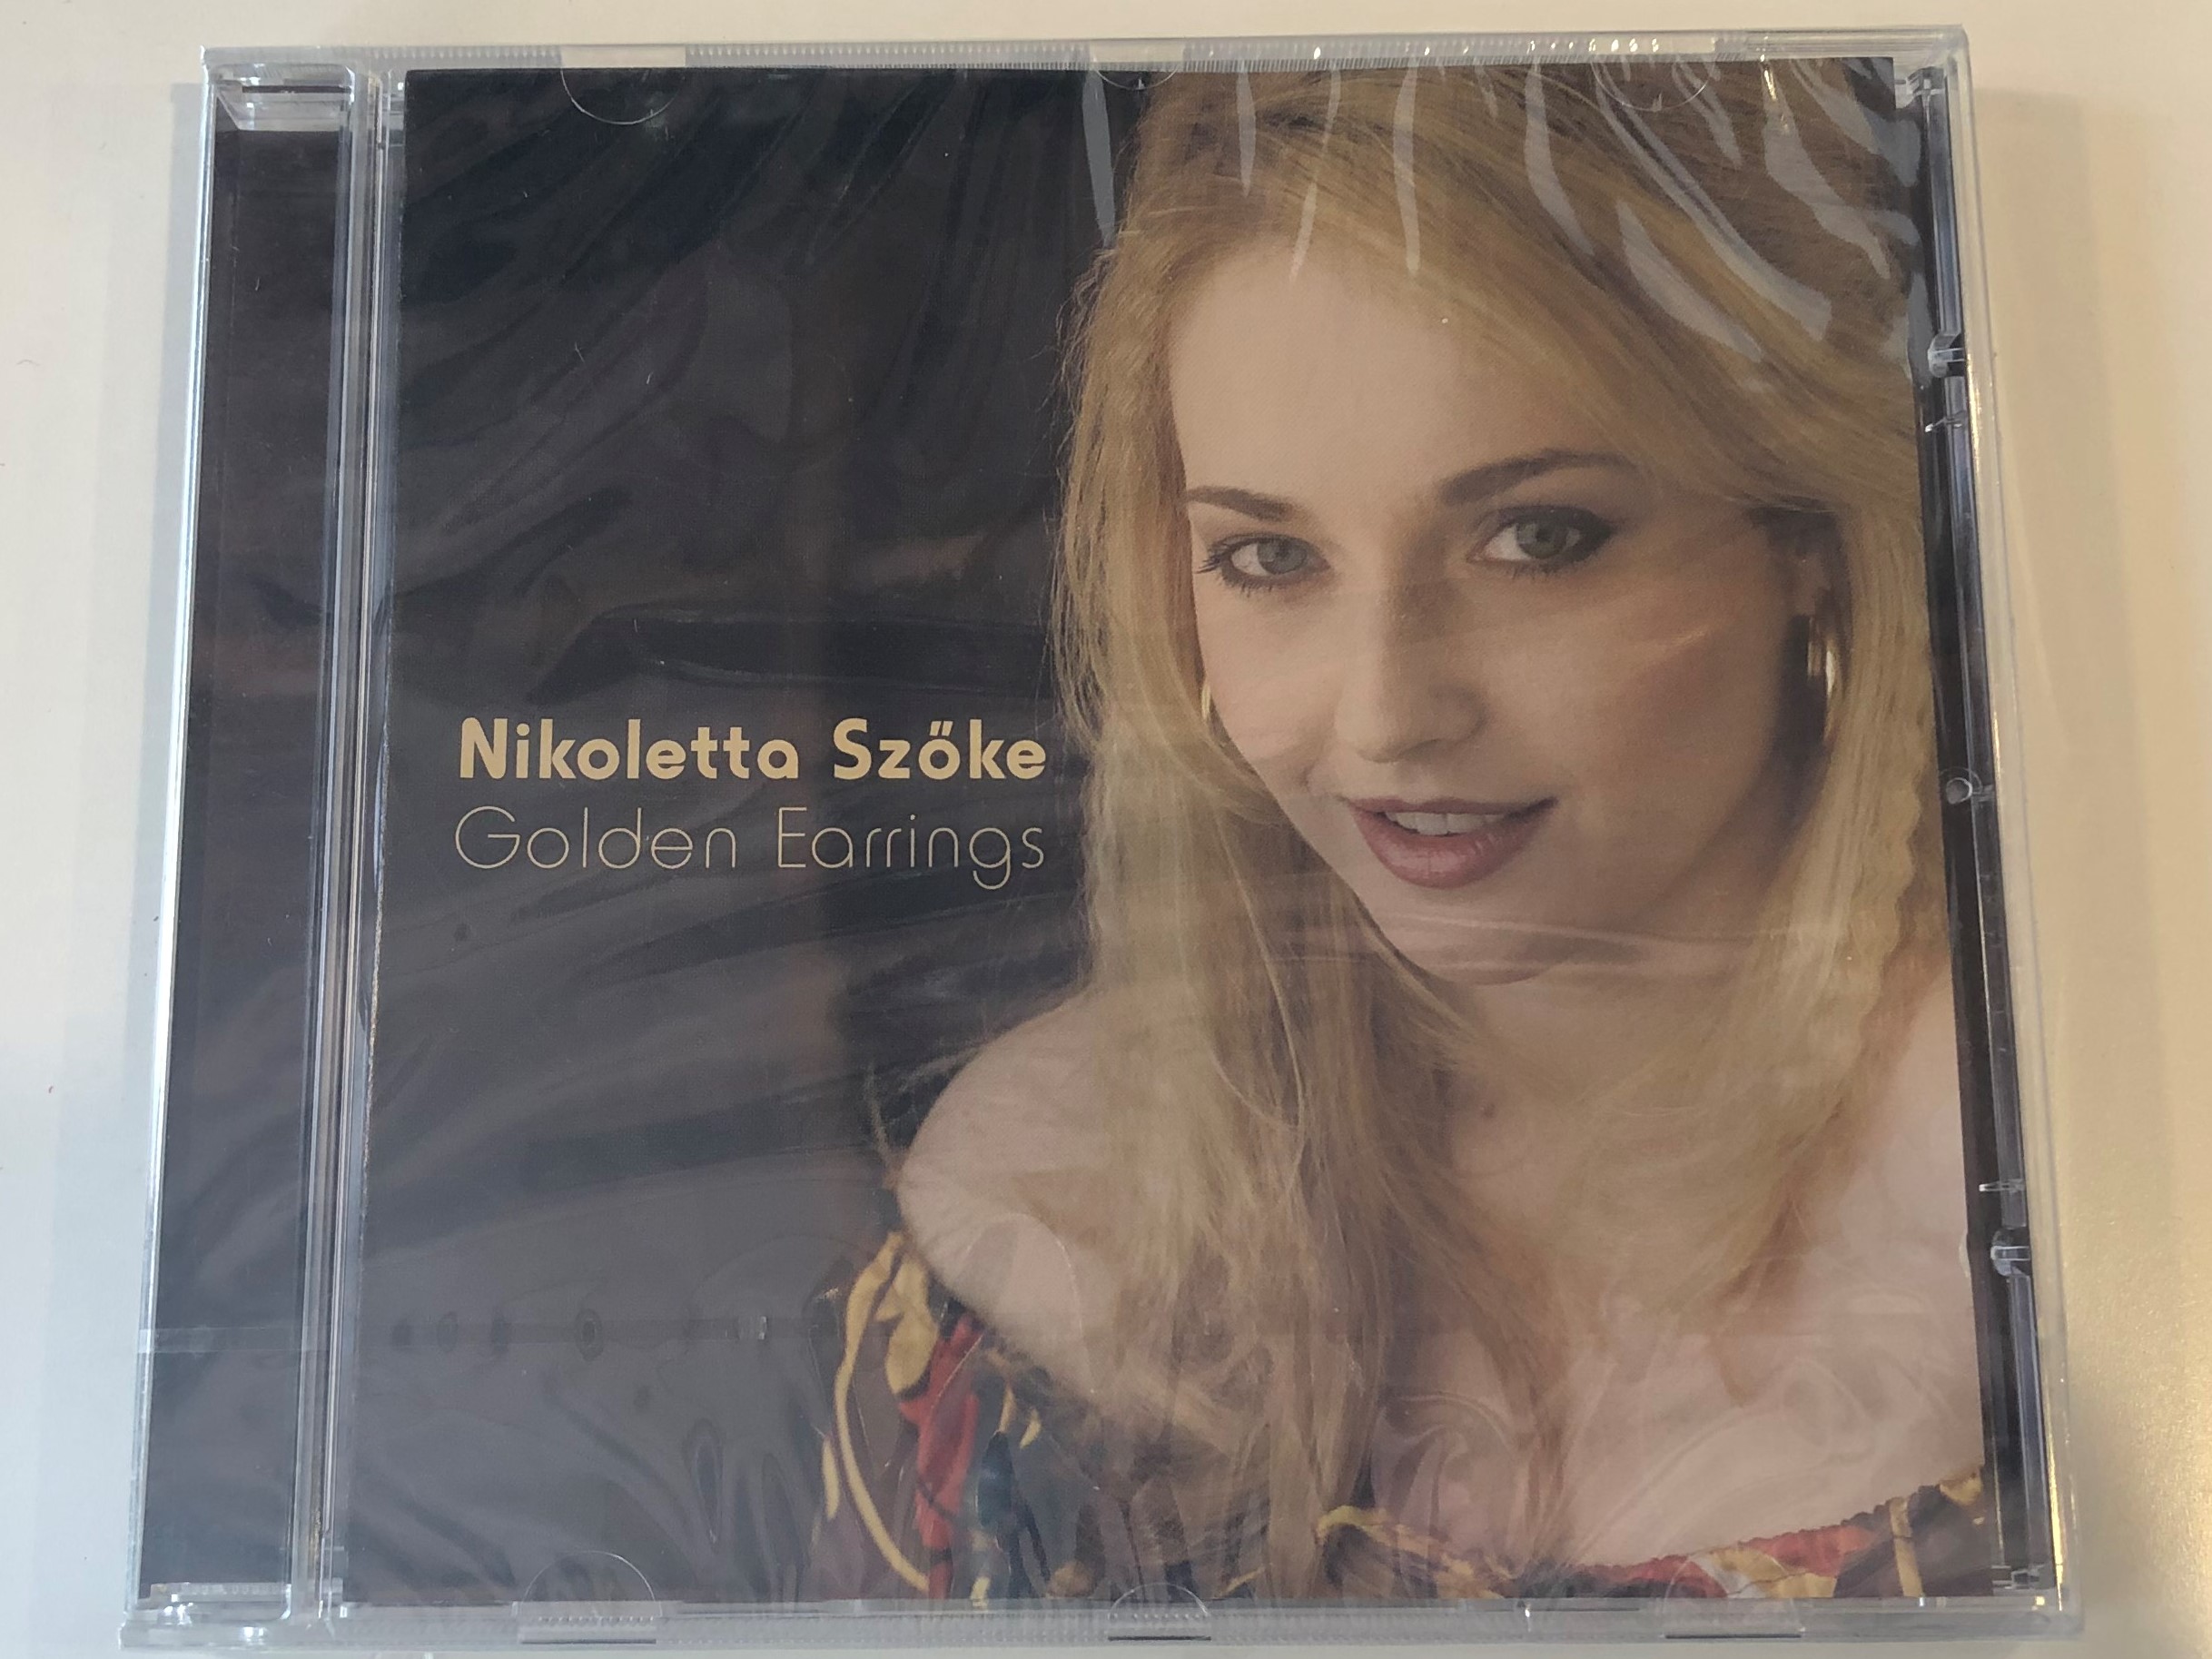 nikoletta-sz-ke-golden-earrings-gramy-records-audio-cd-2008-5998176107928-1-.jpg